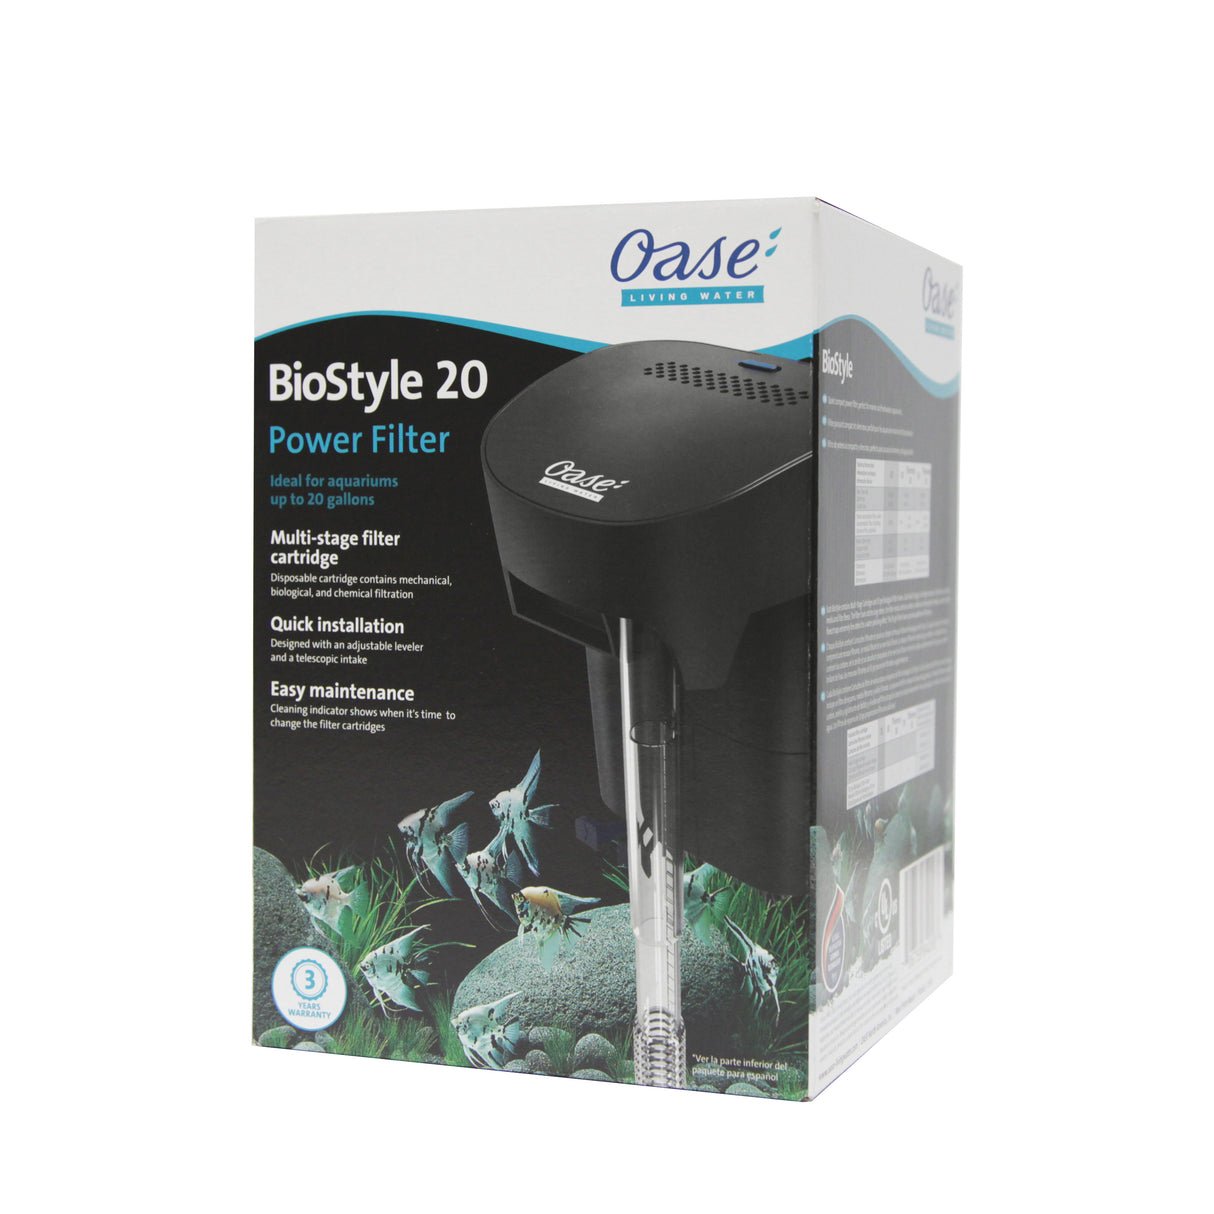 BioStyle 20 Packaging